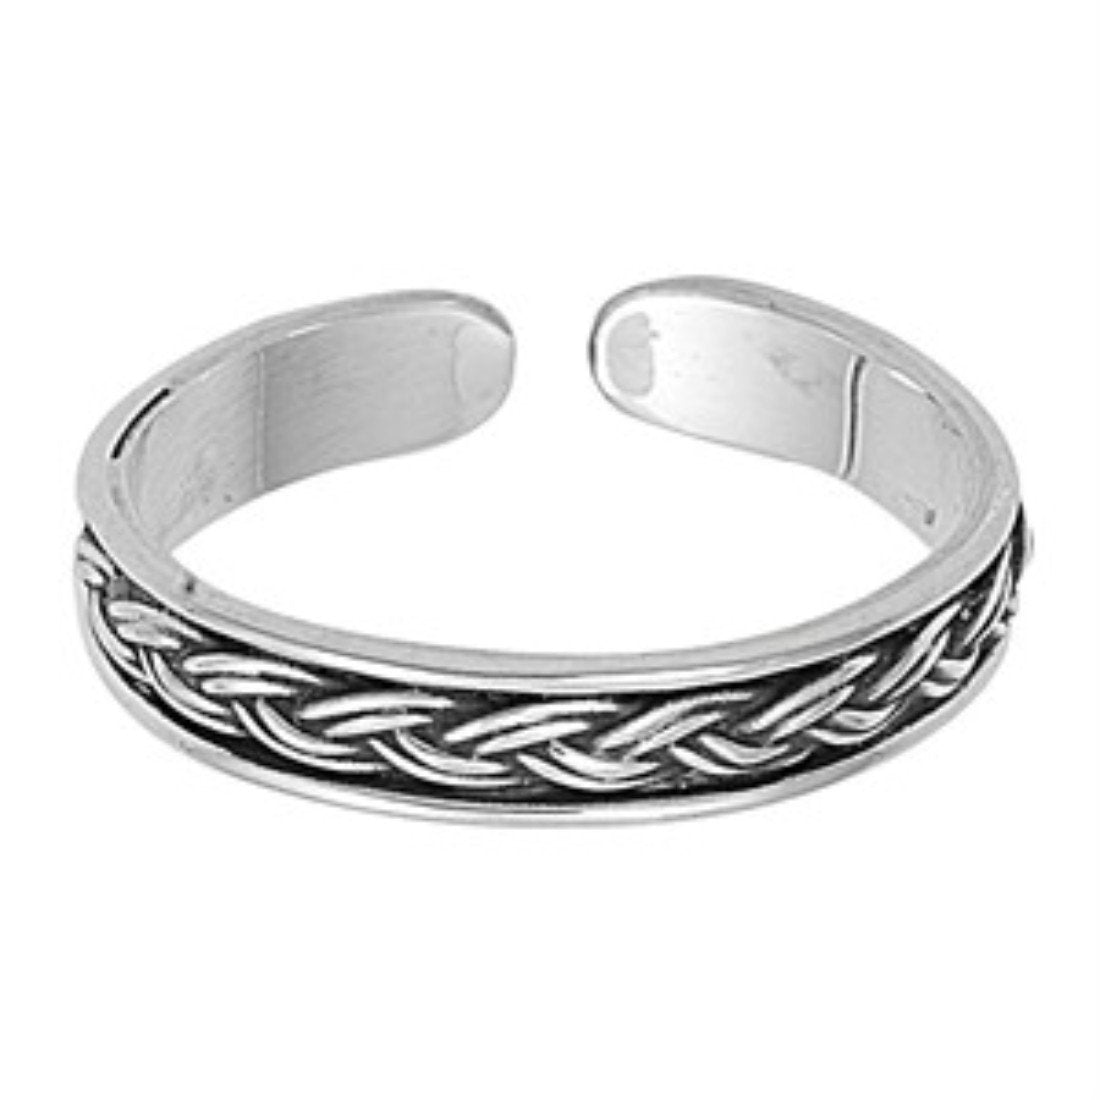 Silver Toe Ring Adjustable Bali Design Band 925 Sterling Silver (4mm)